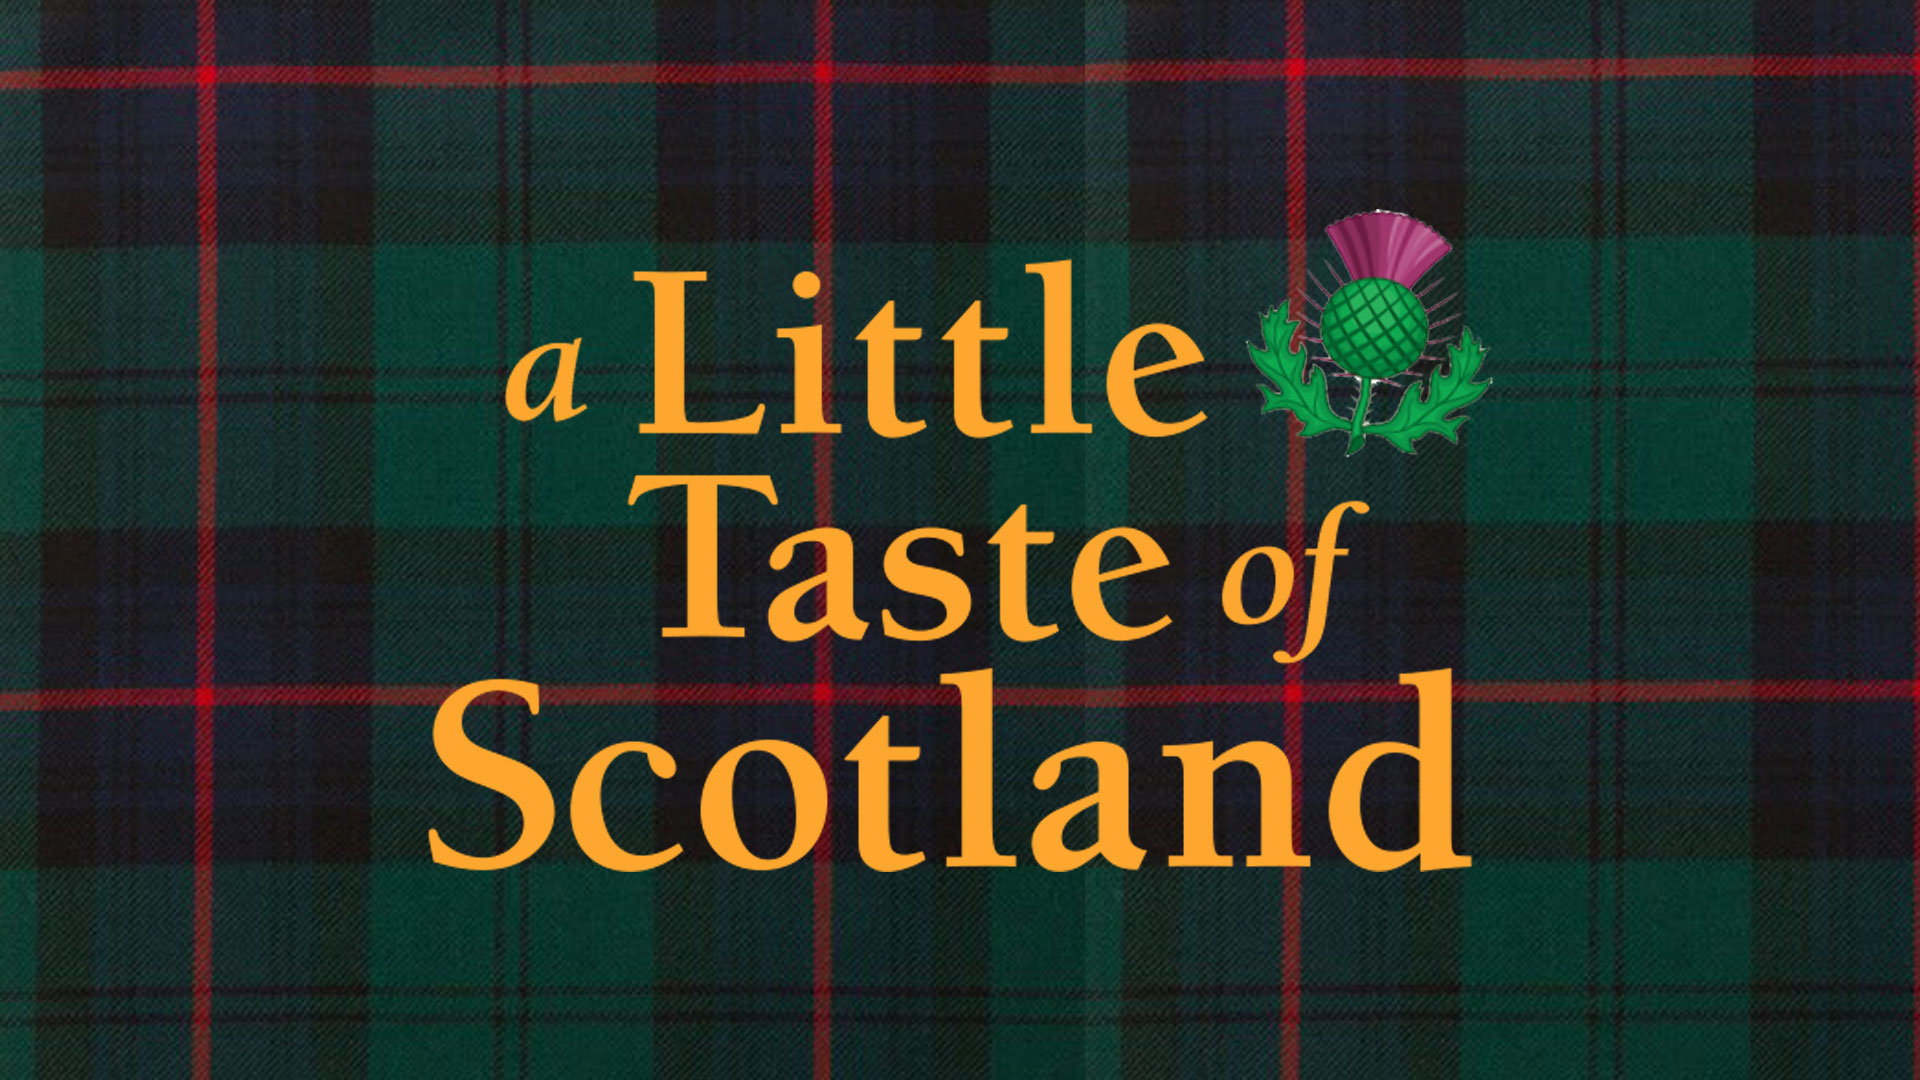 Little Taste of Scotland